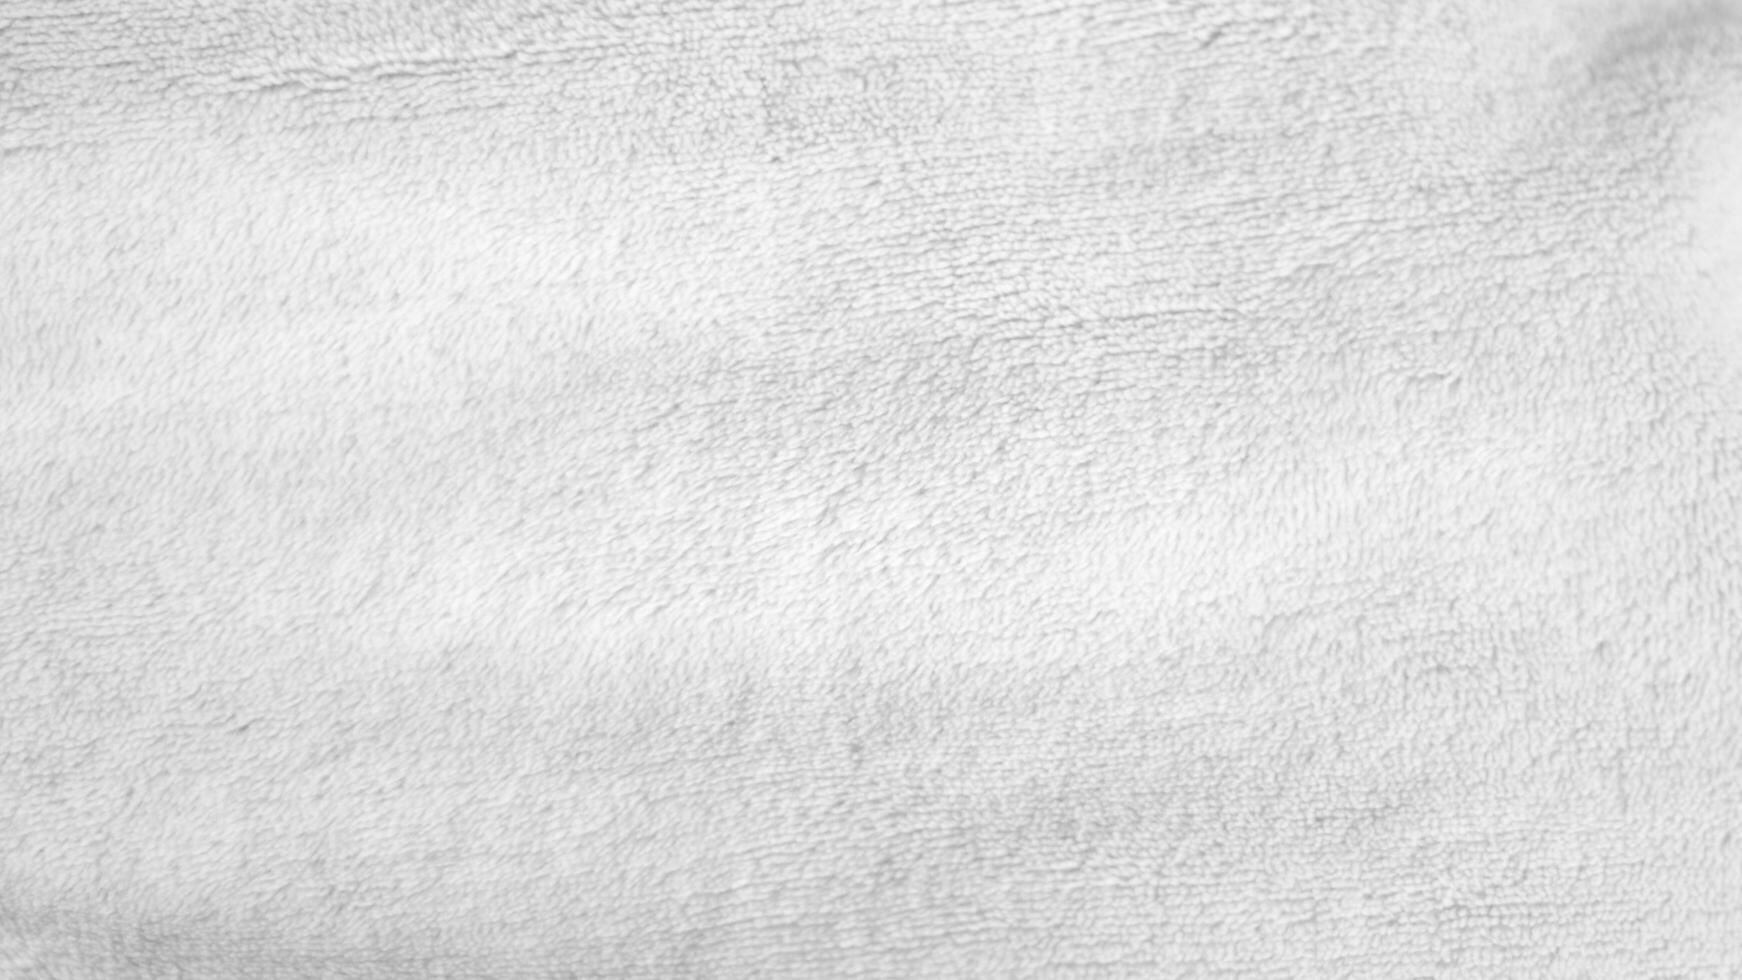 fondo de textura de lana limpia blanca. lana de oveja natural ligera. algodón blanco sin costuras. textura de piel esponjosa para diseñadores. primer fragmento alfombra de lana blanca... foto